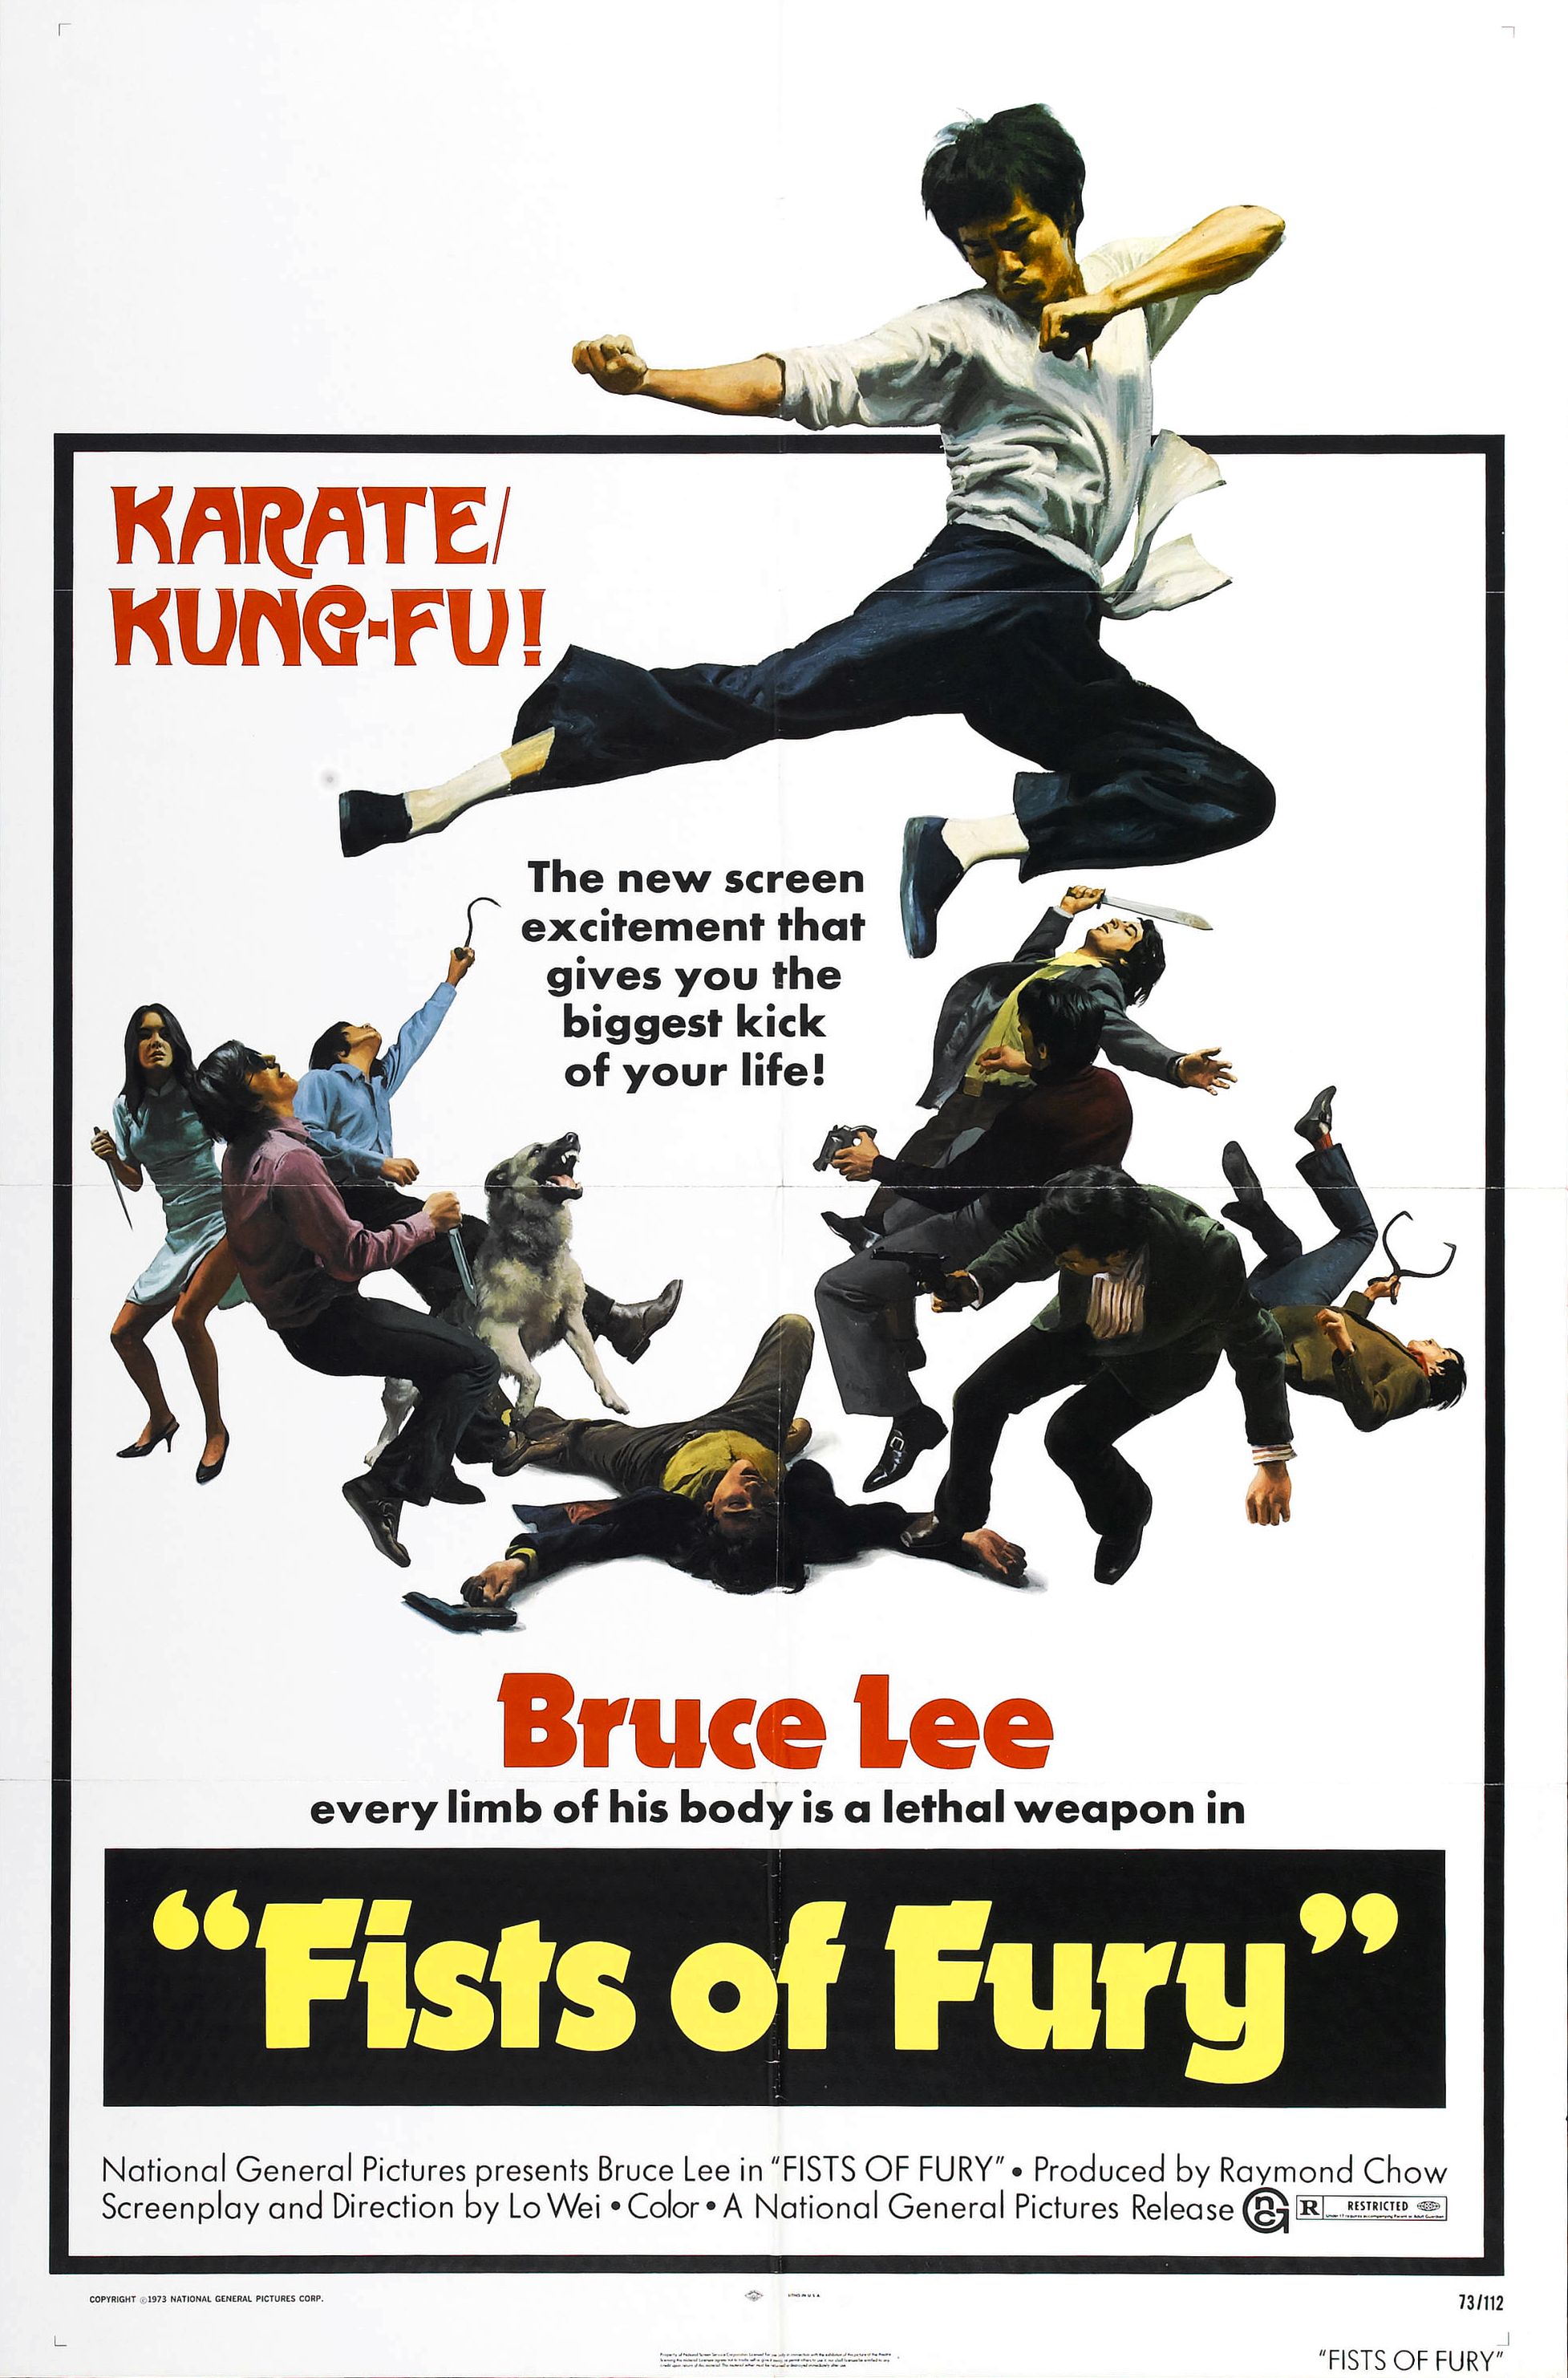 The Big Boss aka Fists of Fury (1971)